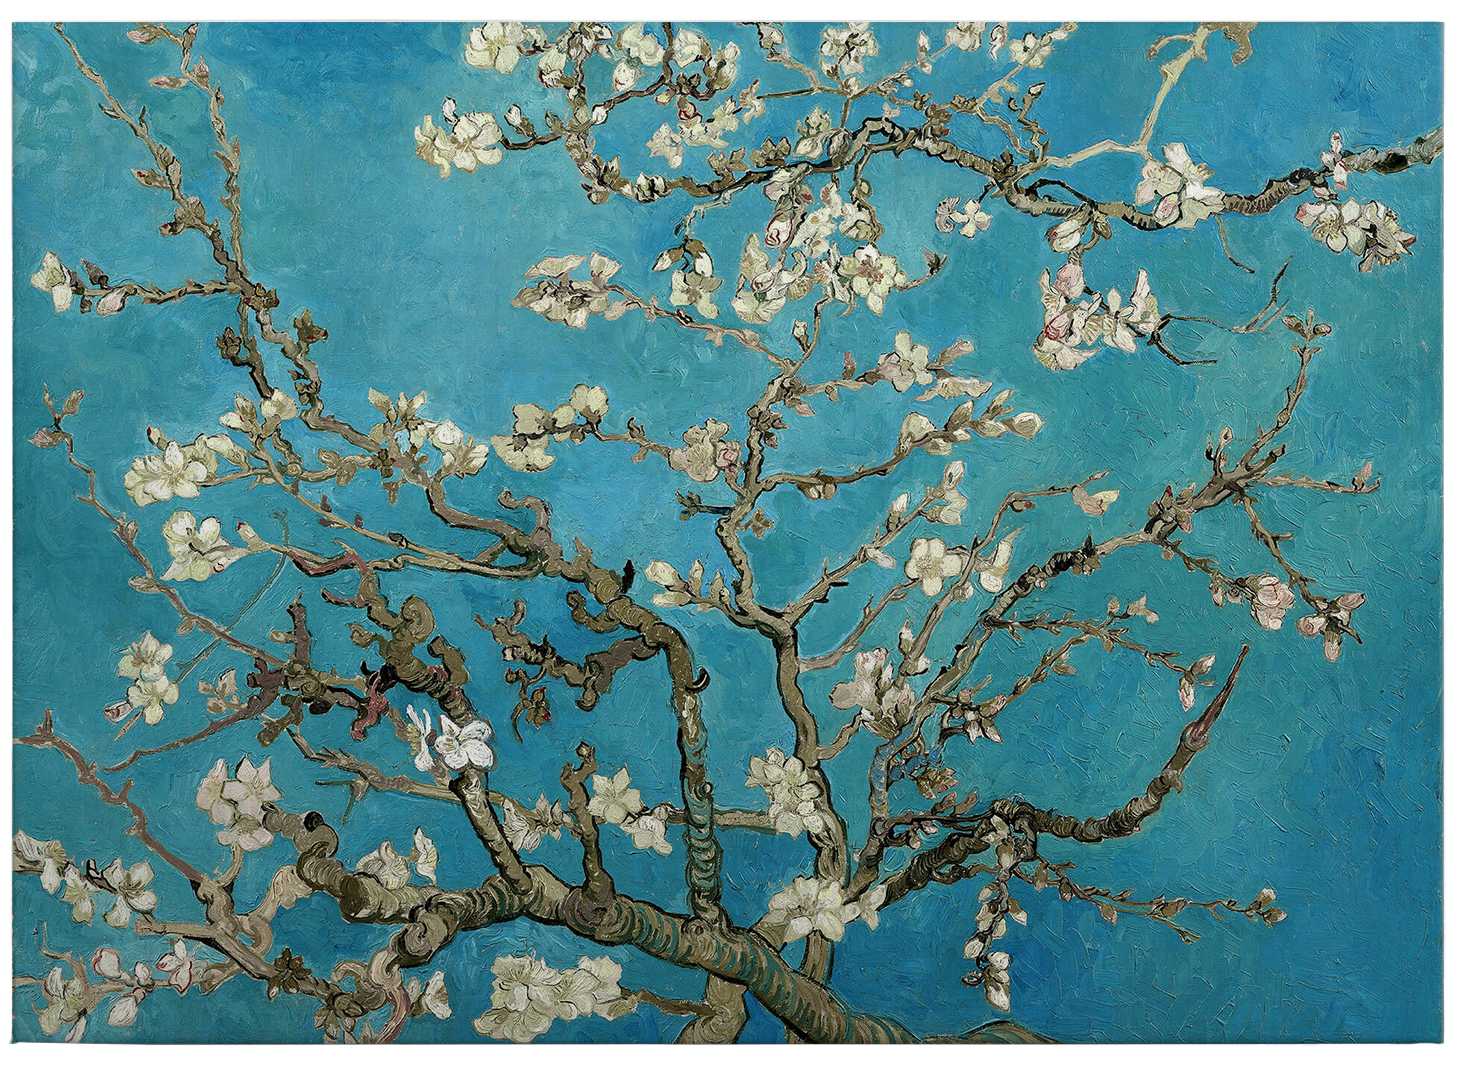             Leinwandbild "Mandelblüten" von Van Gogh – 0,70 m x 0,50 m
        